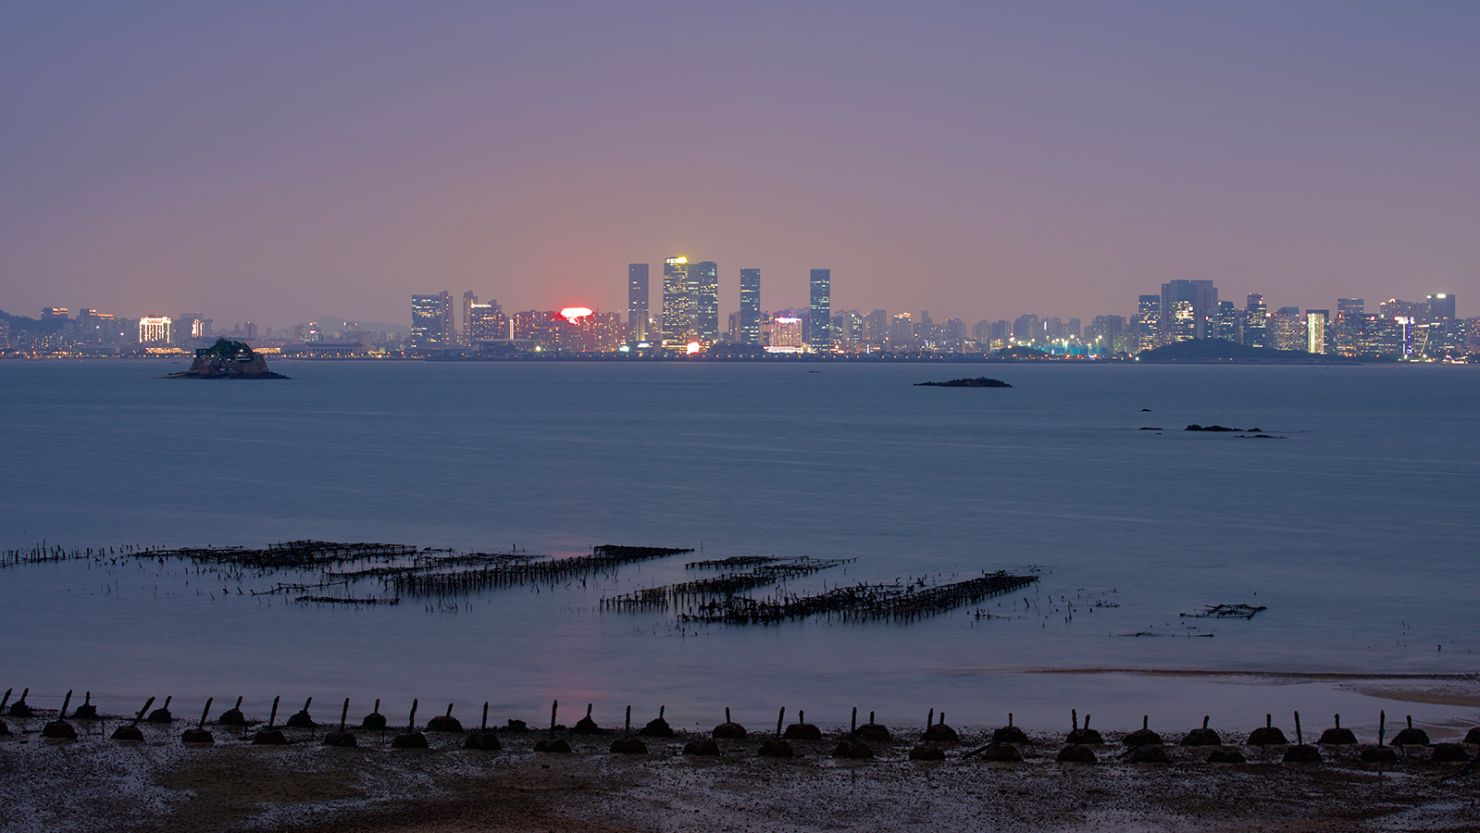 The gleam of city lights on China's coast seen from Taiwan's Kinmen islands.